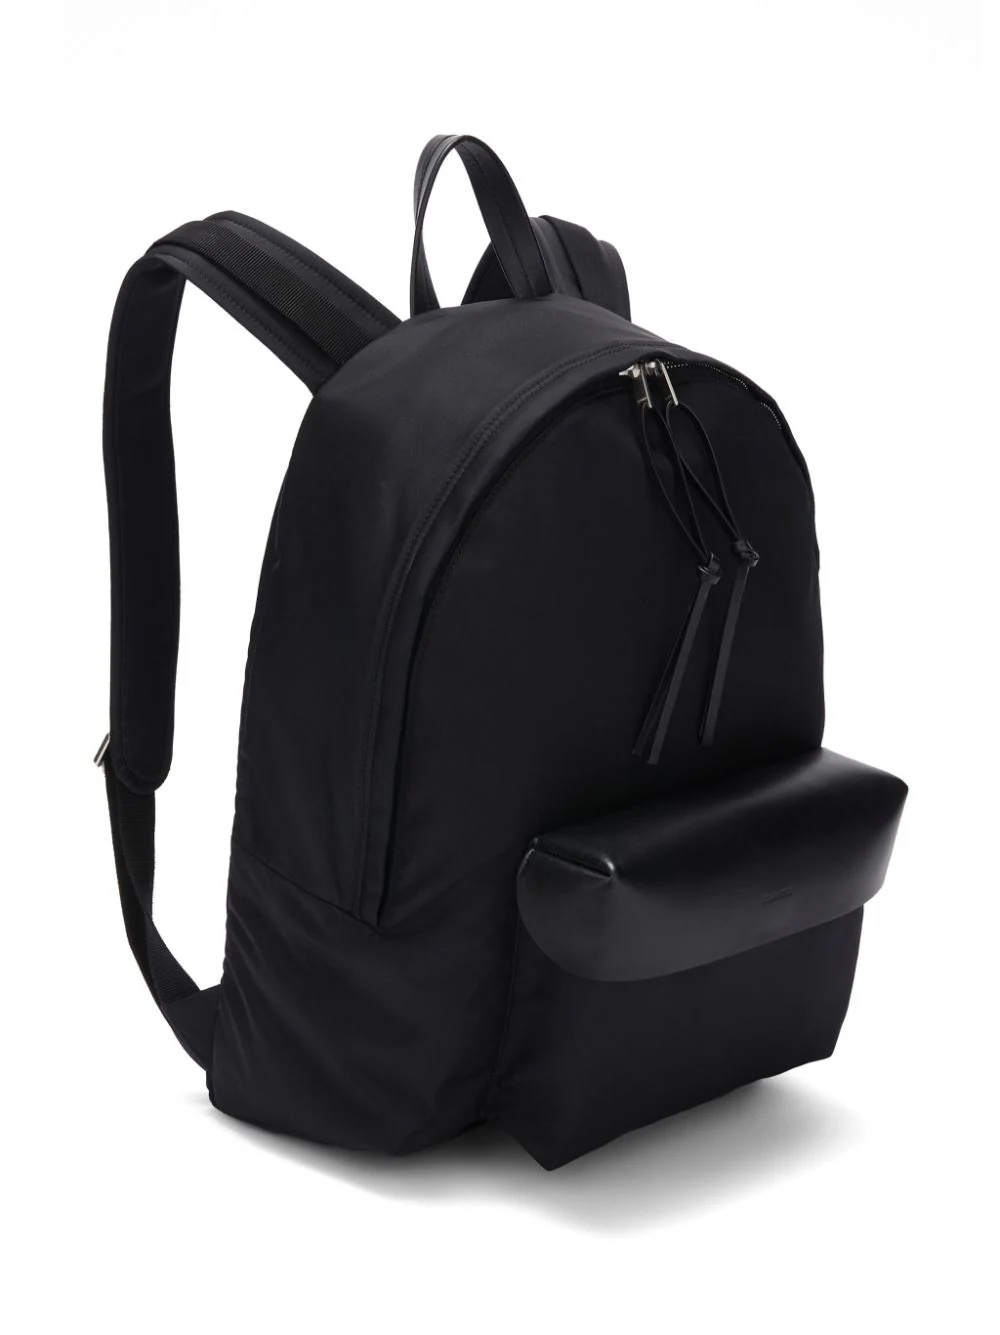 Lid Backpack - 2